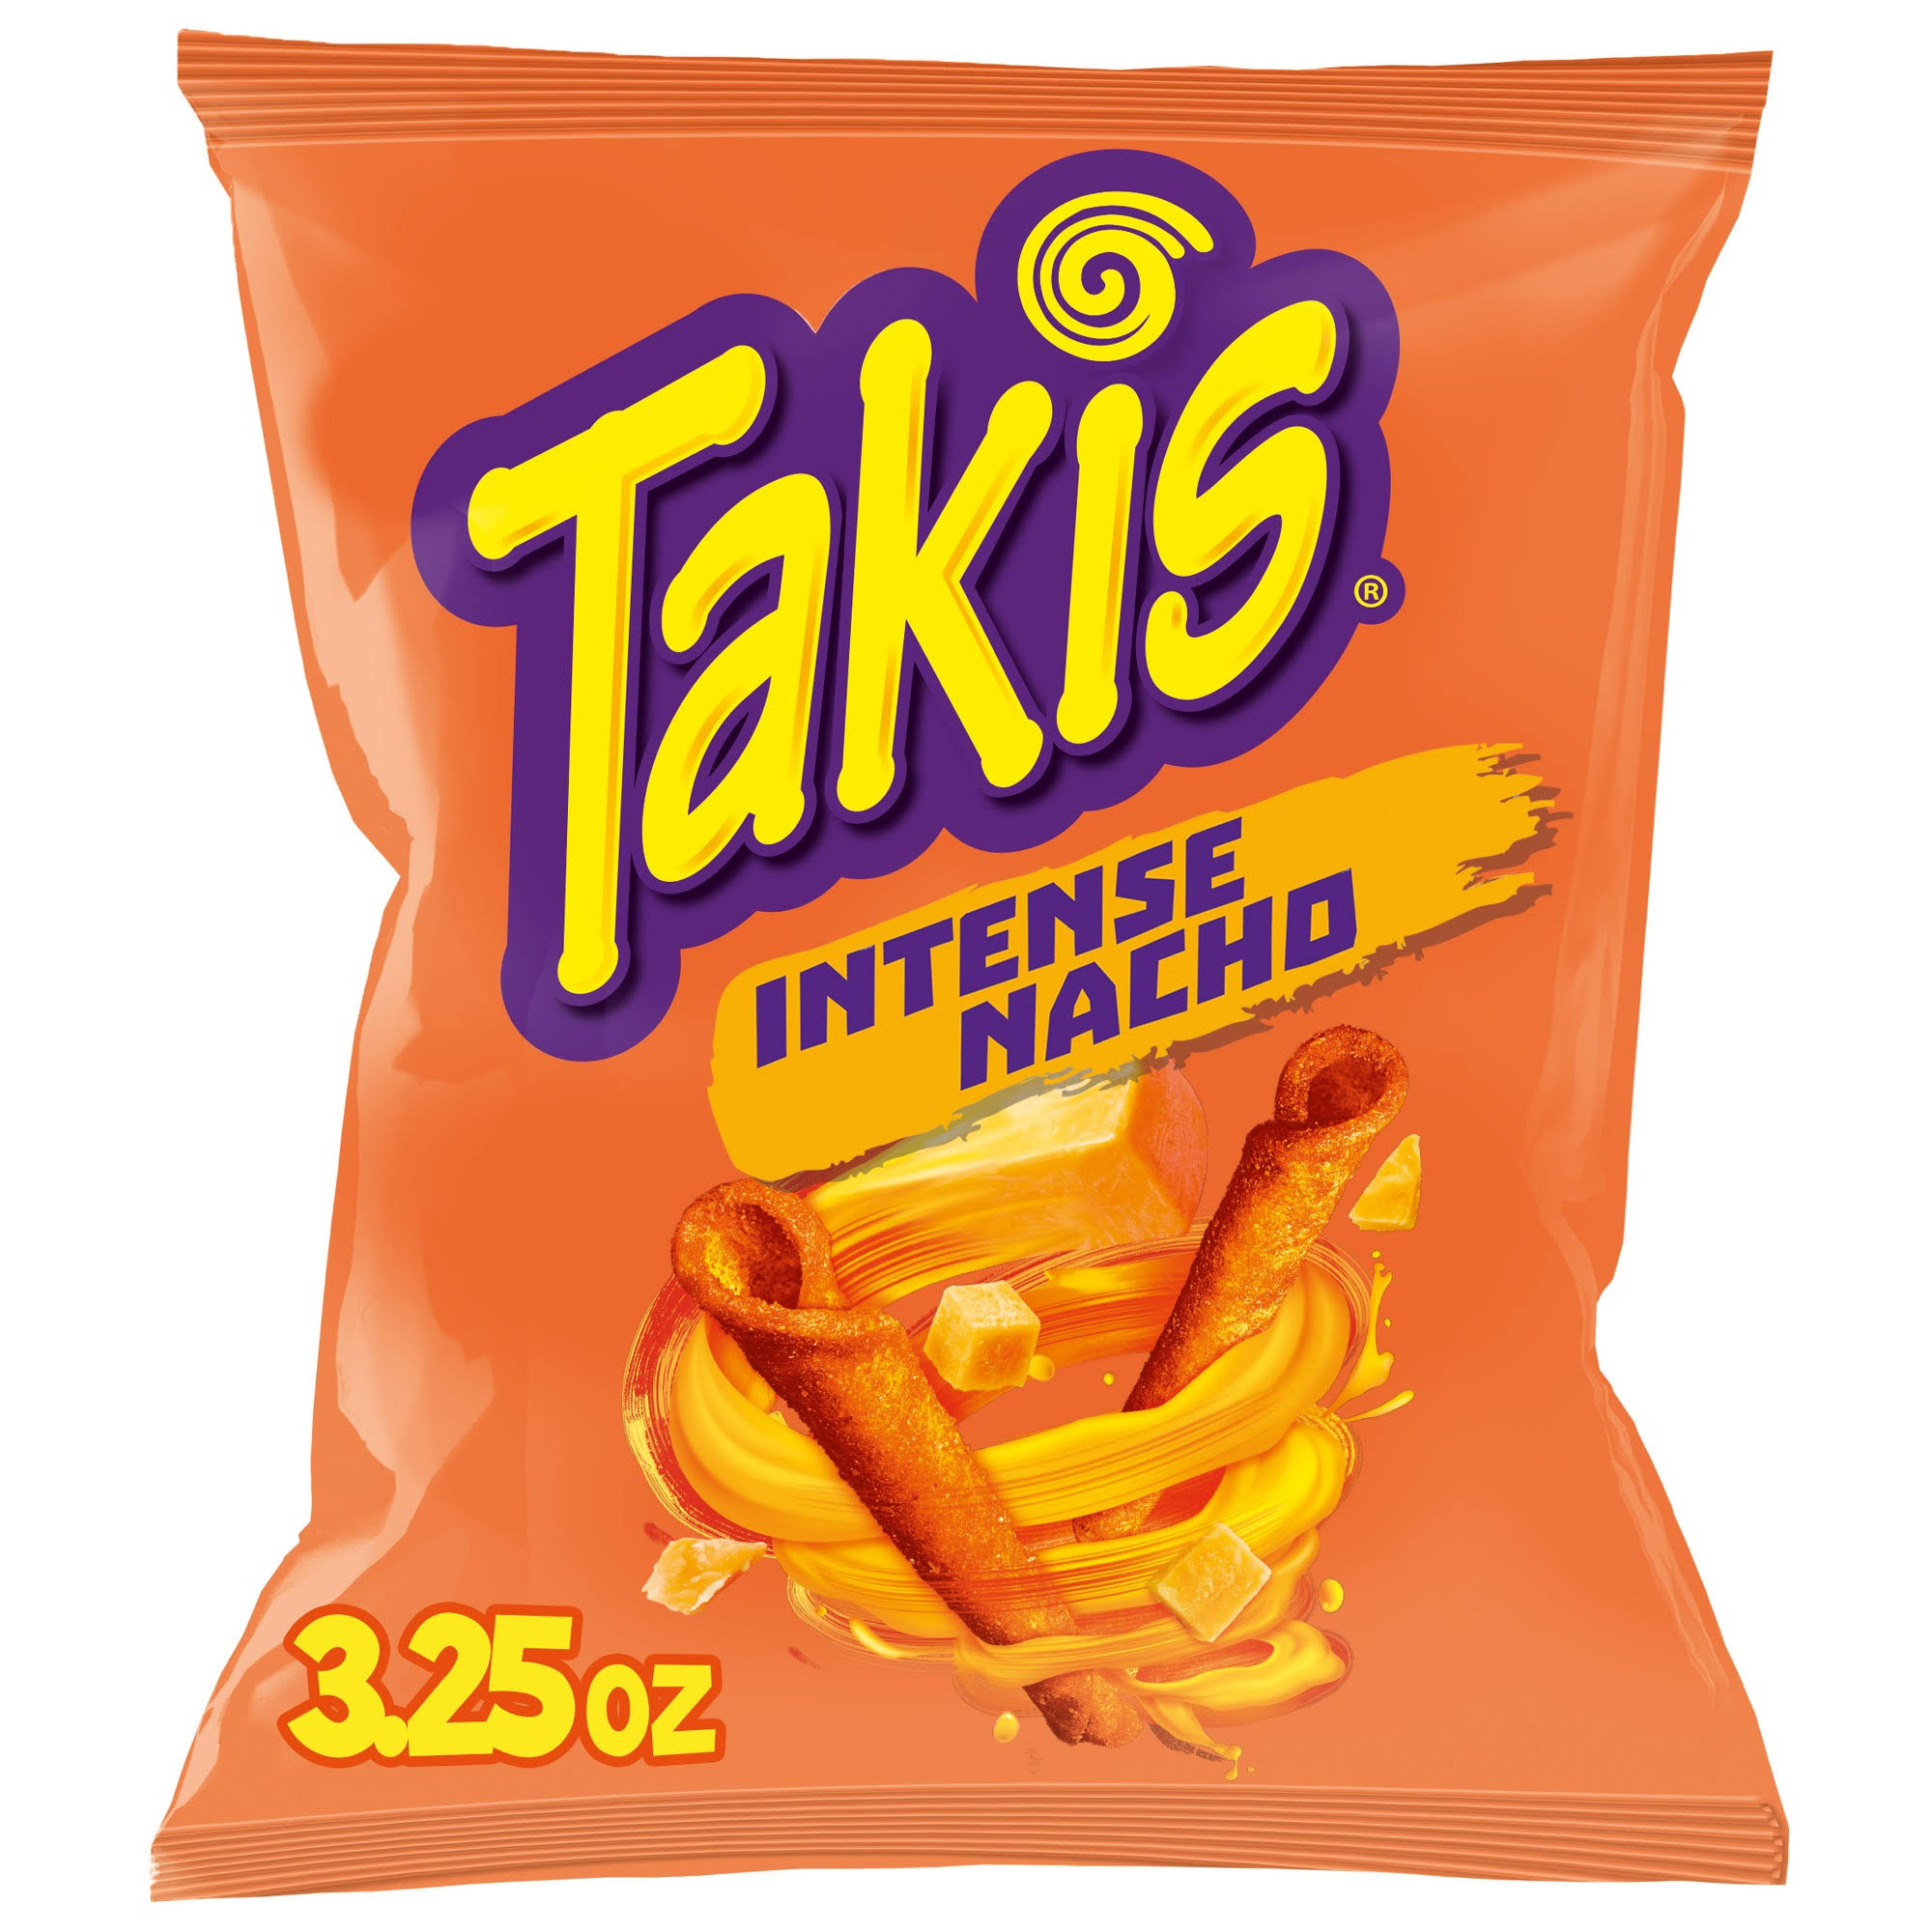 Takis Intense Nacho Tortilla Chips Bag - 3.25 oz